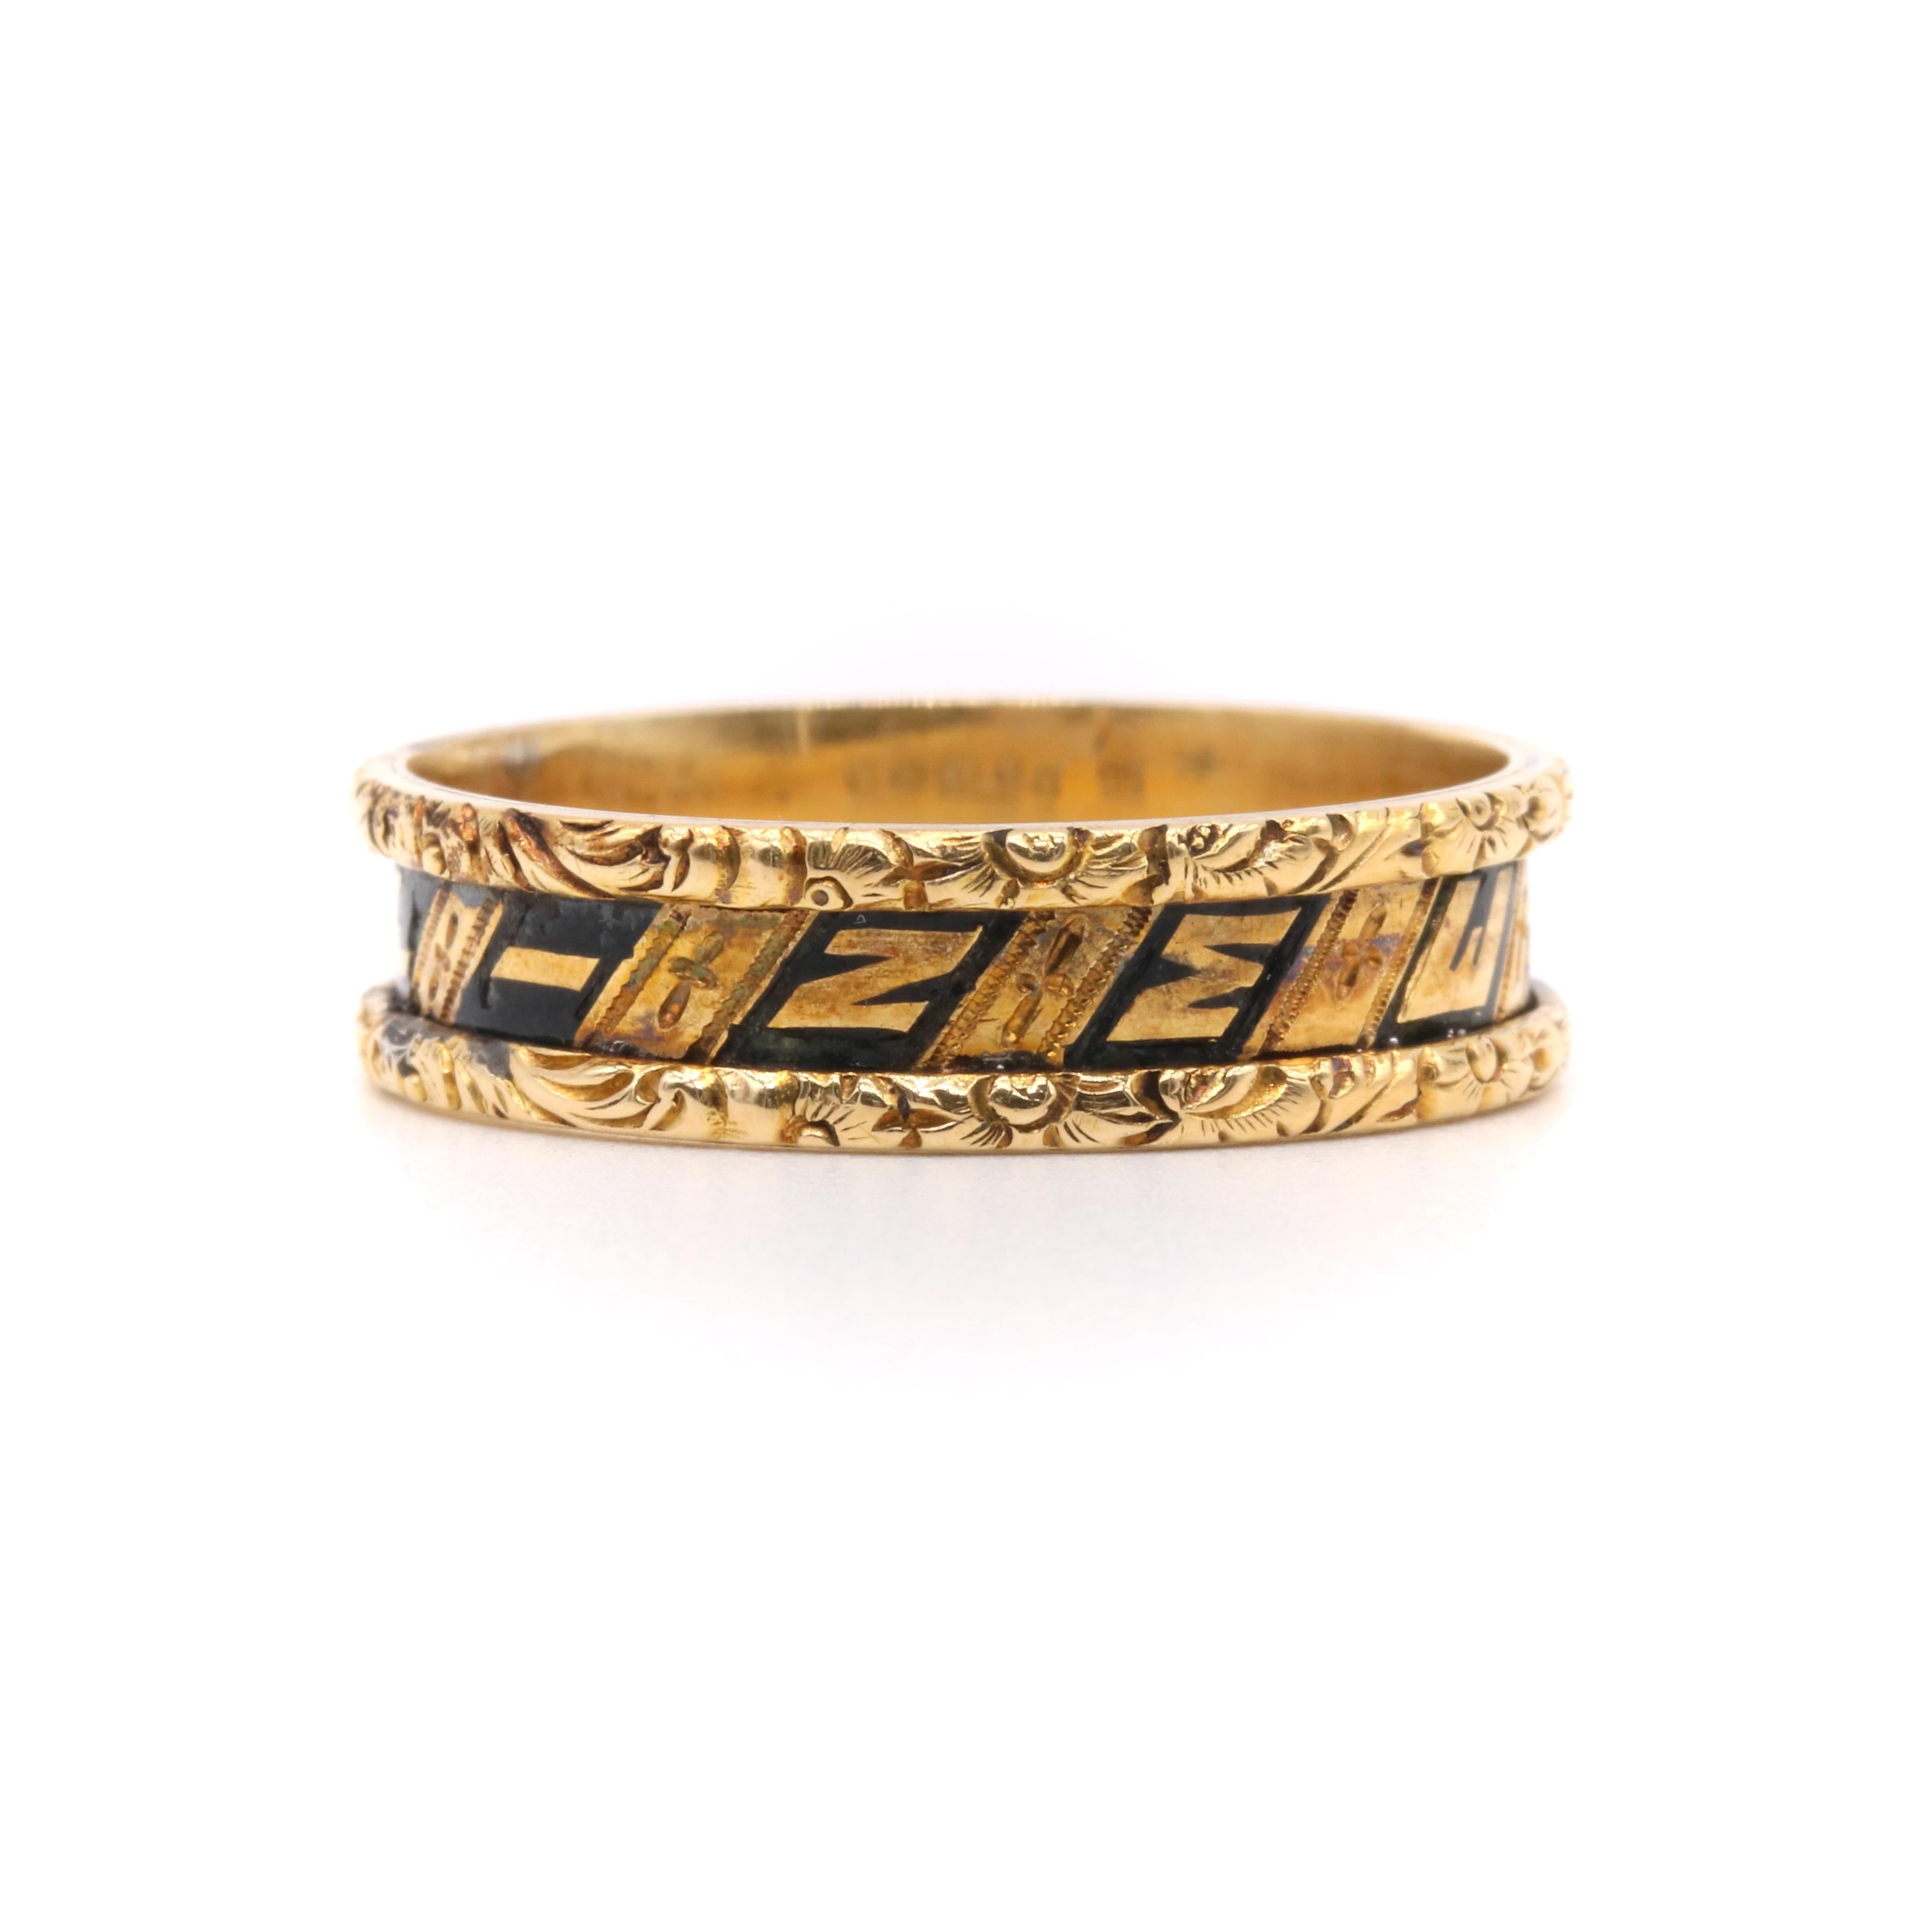 Victorian 1850s 18K Gold Black Enamel “In Memory Of” Engraved Mourning Ring